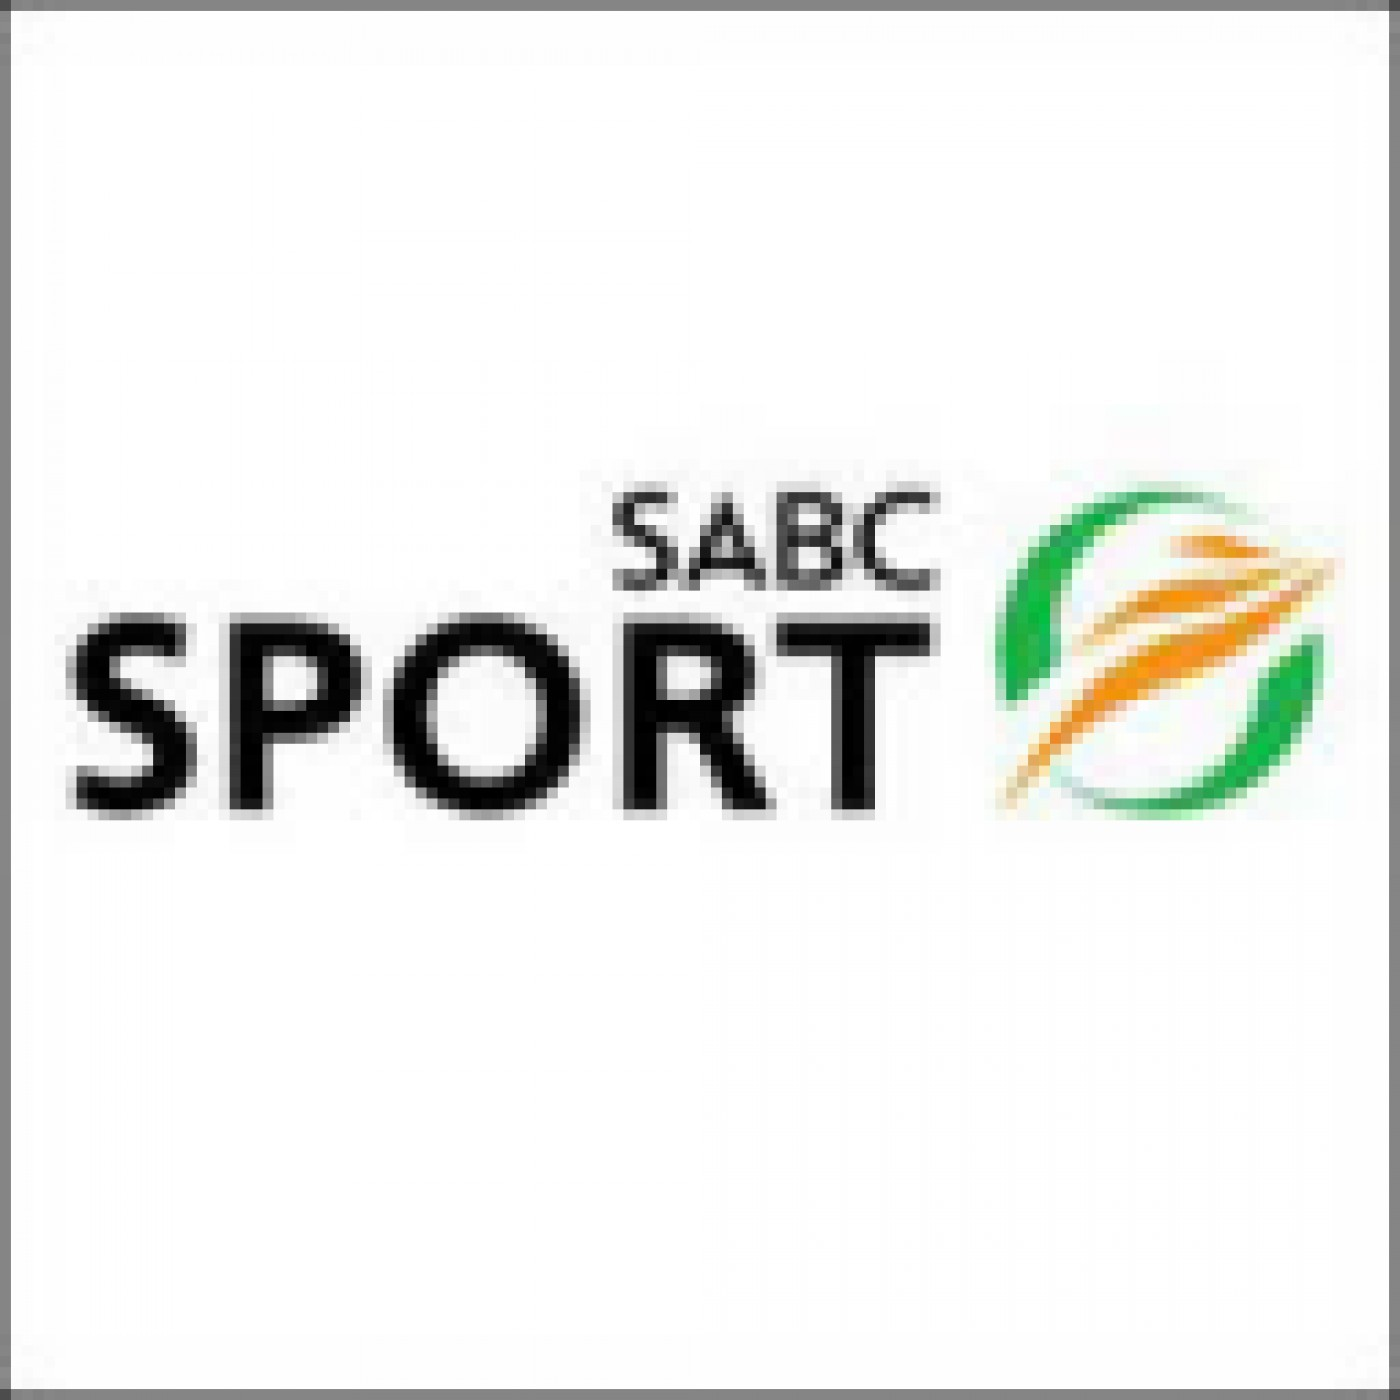 Sundowns has never struggled against WAC in Pretoria - Mosimane